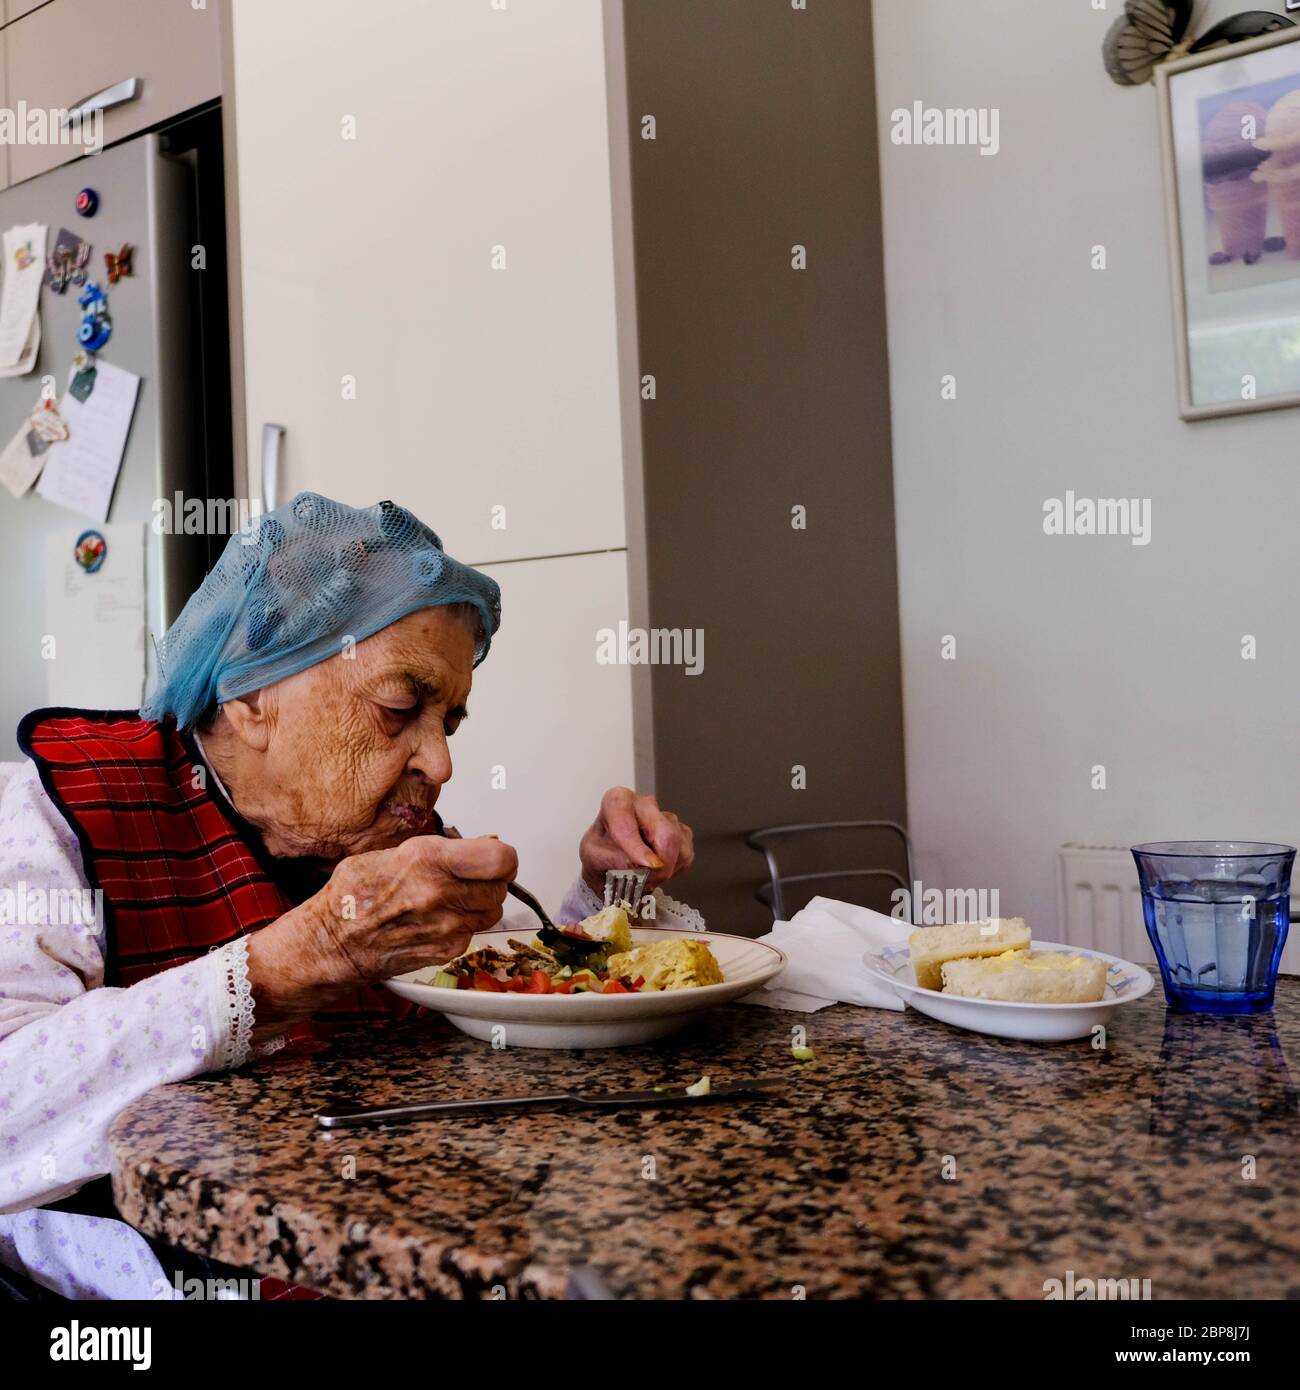 Elderly Woman Eating Alone, Self Isolating During The UK Coronavirus Lockdown, Eating A Meal Stock Photo